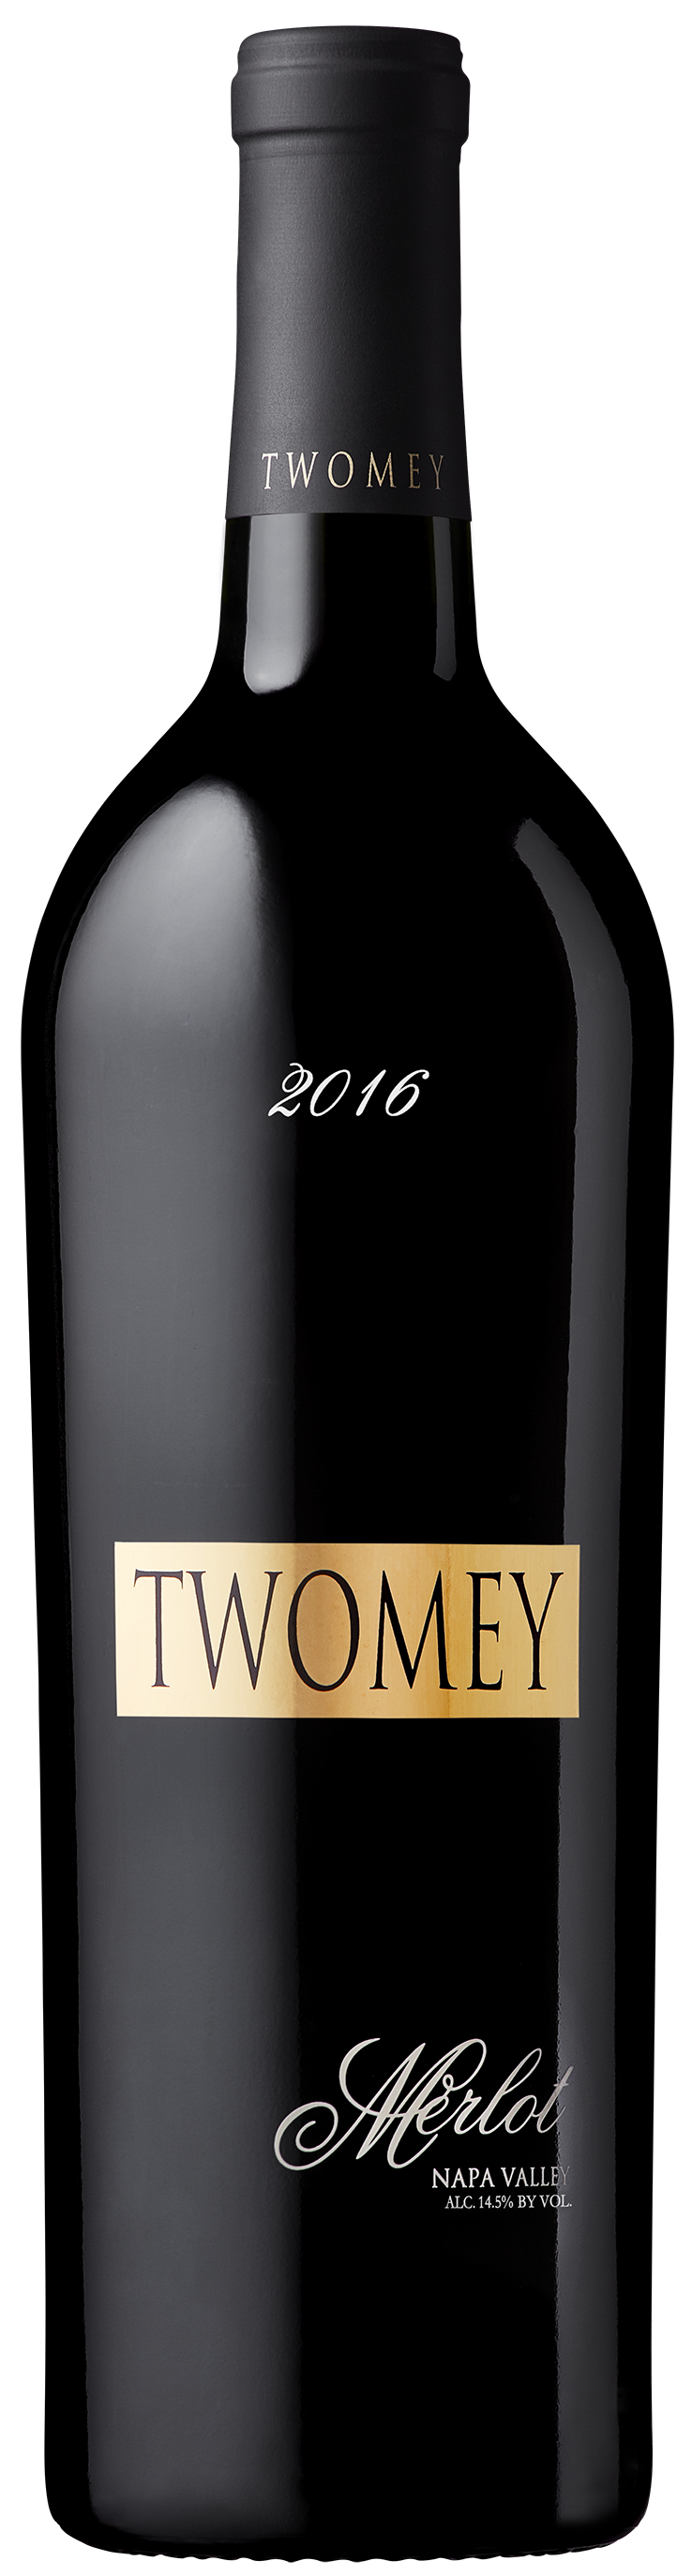 Twomey - Merlot Napa Valley 2015 (750)